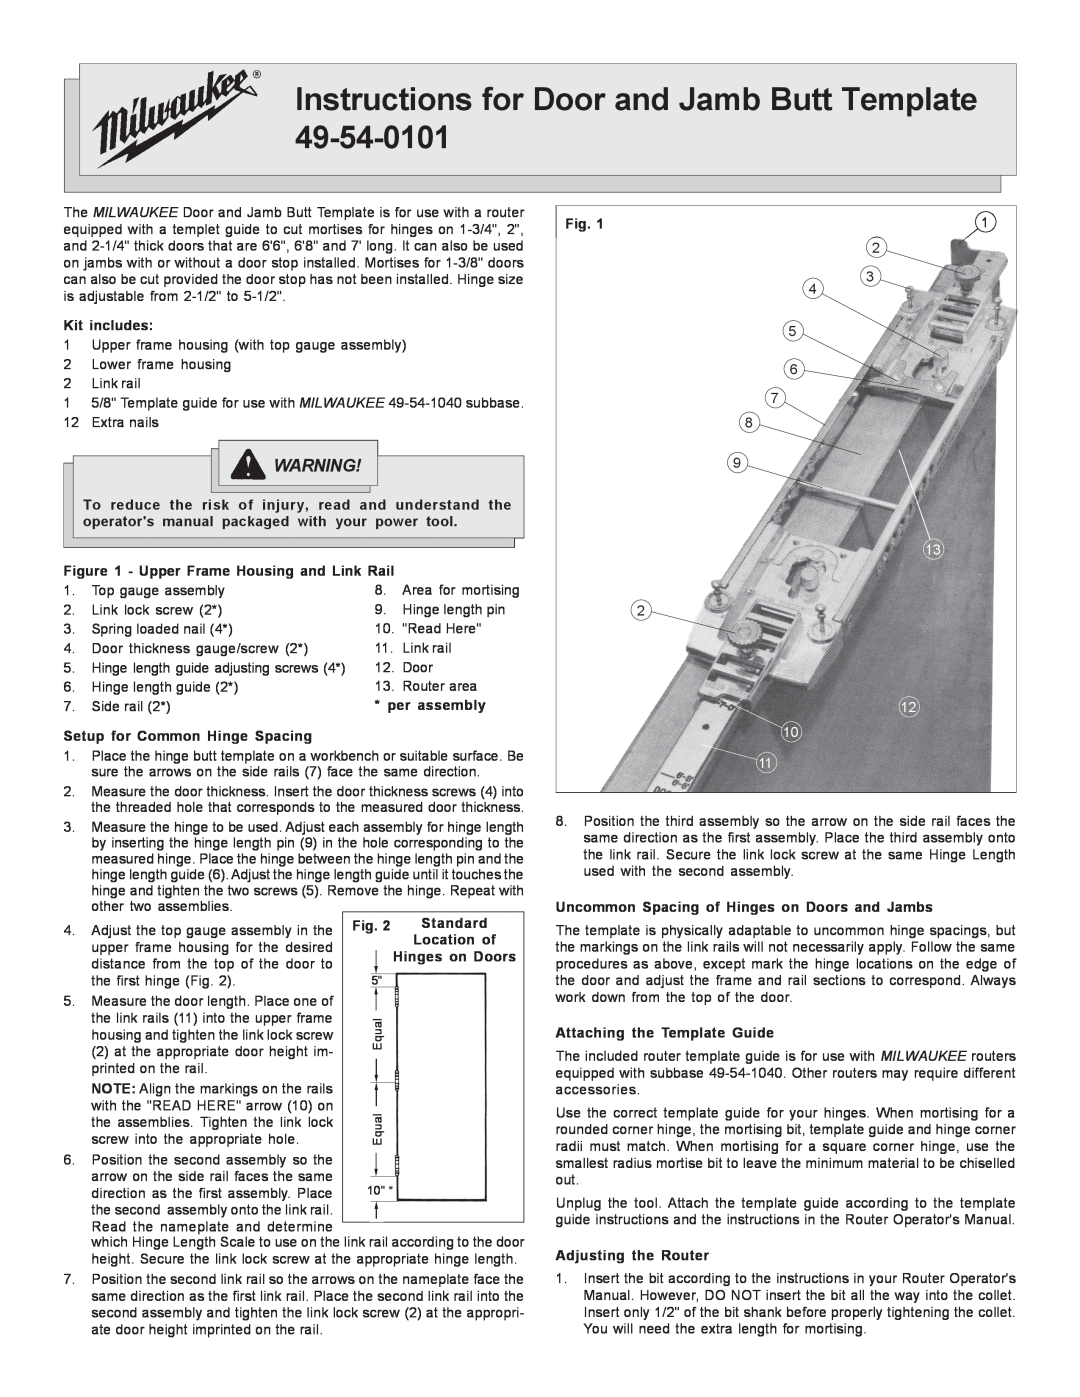 Milwaukee 49-54-0101, 49-54-1040 manual Instructions for Door and Jamb Butt Template 